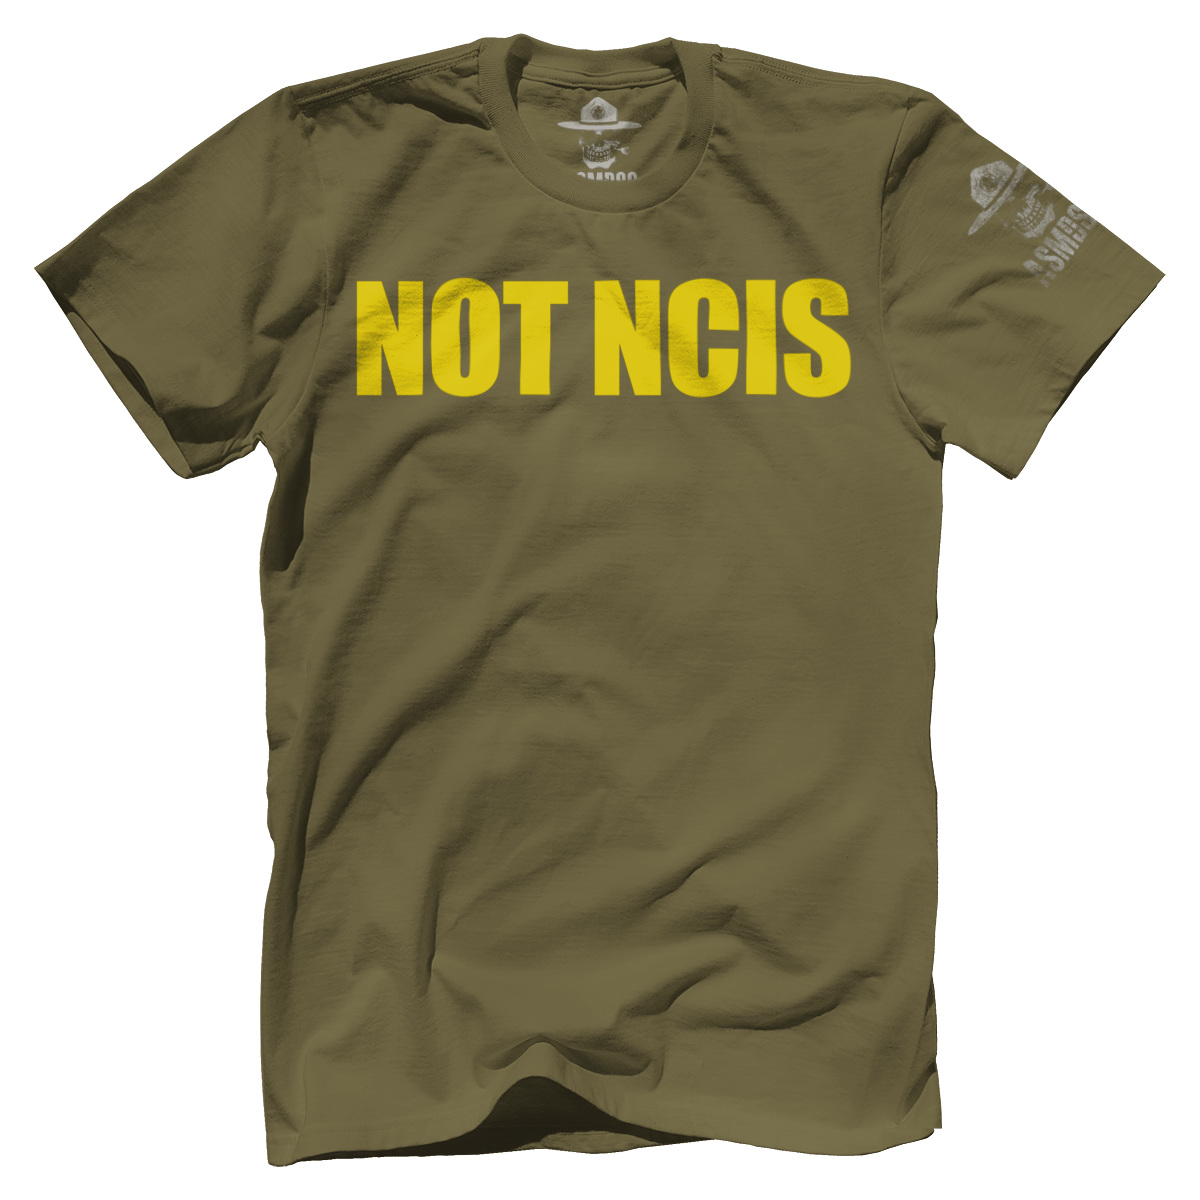 Not NCIS